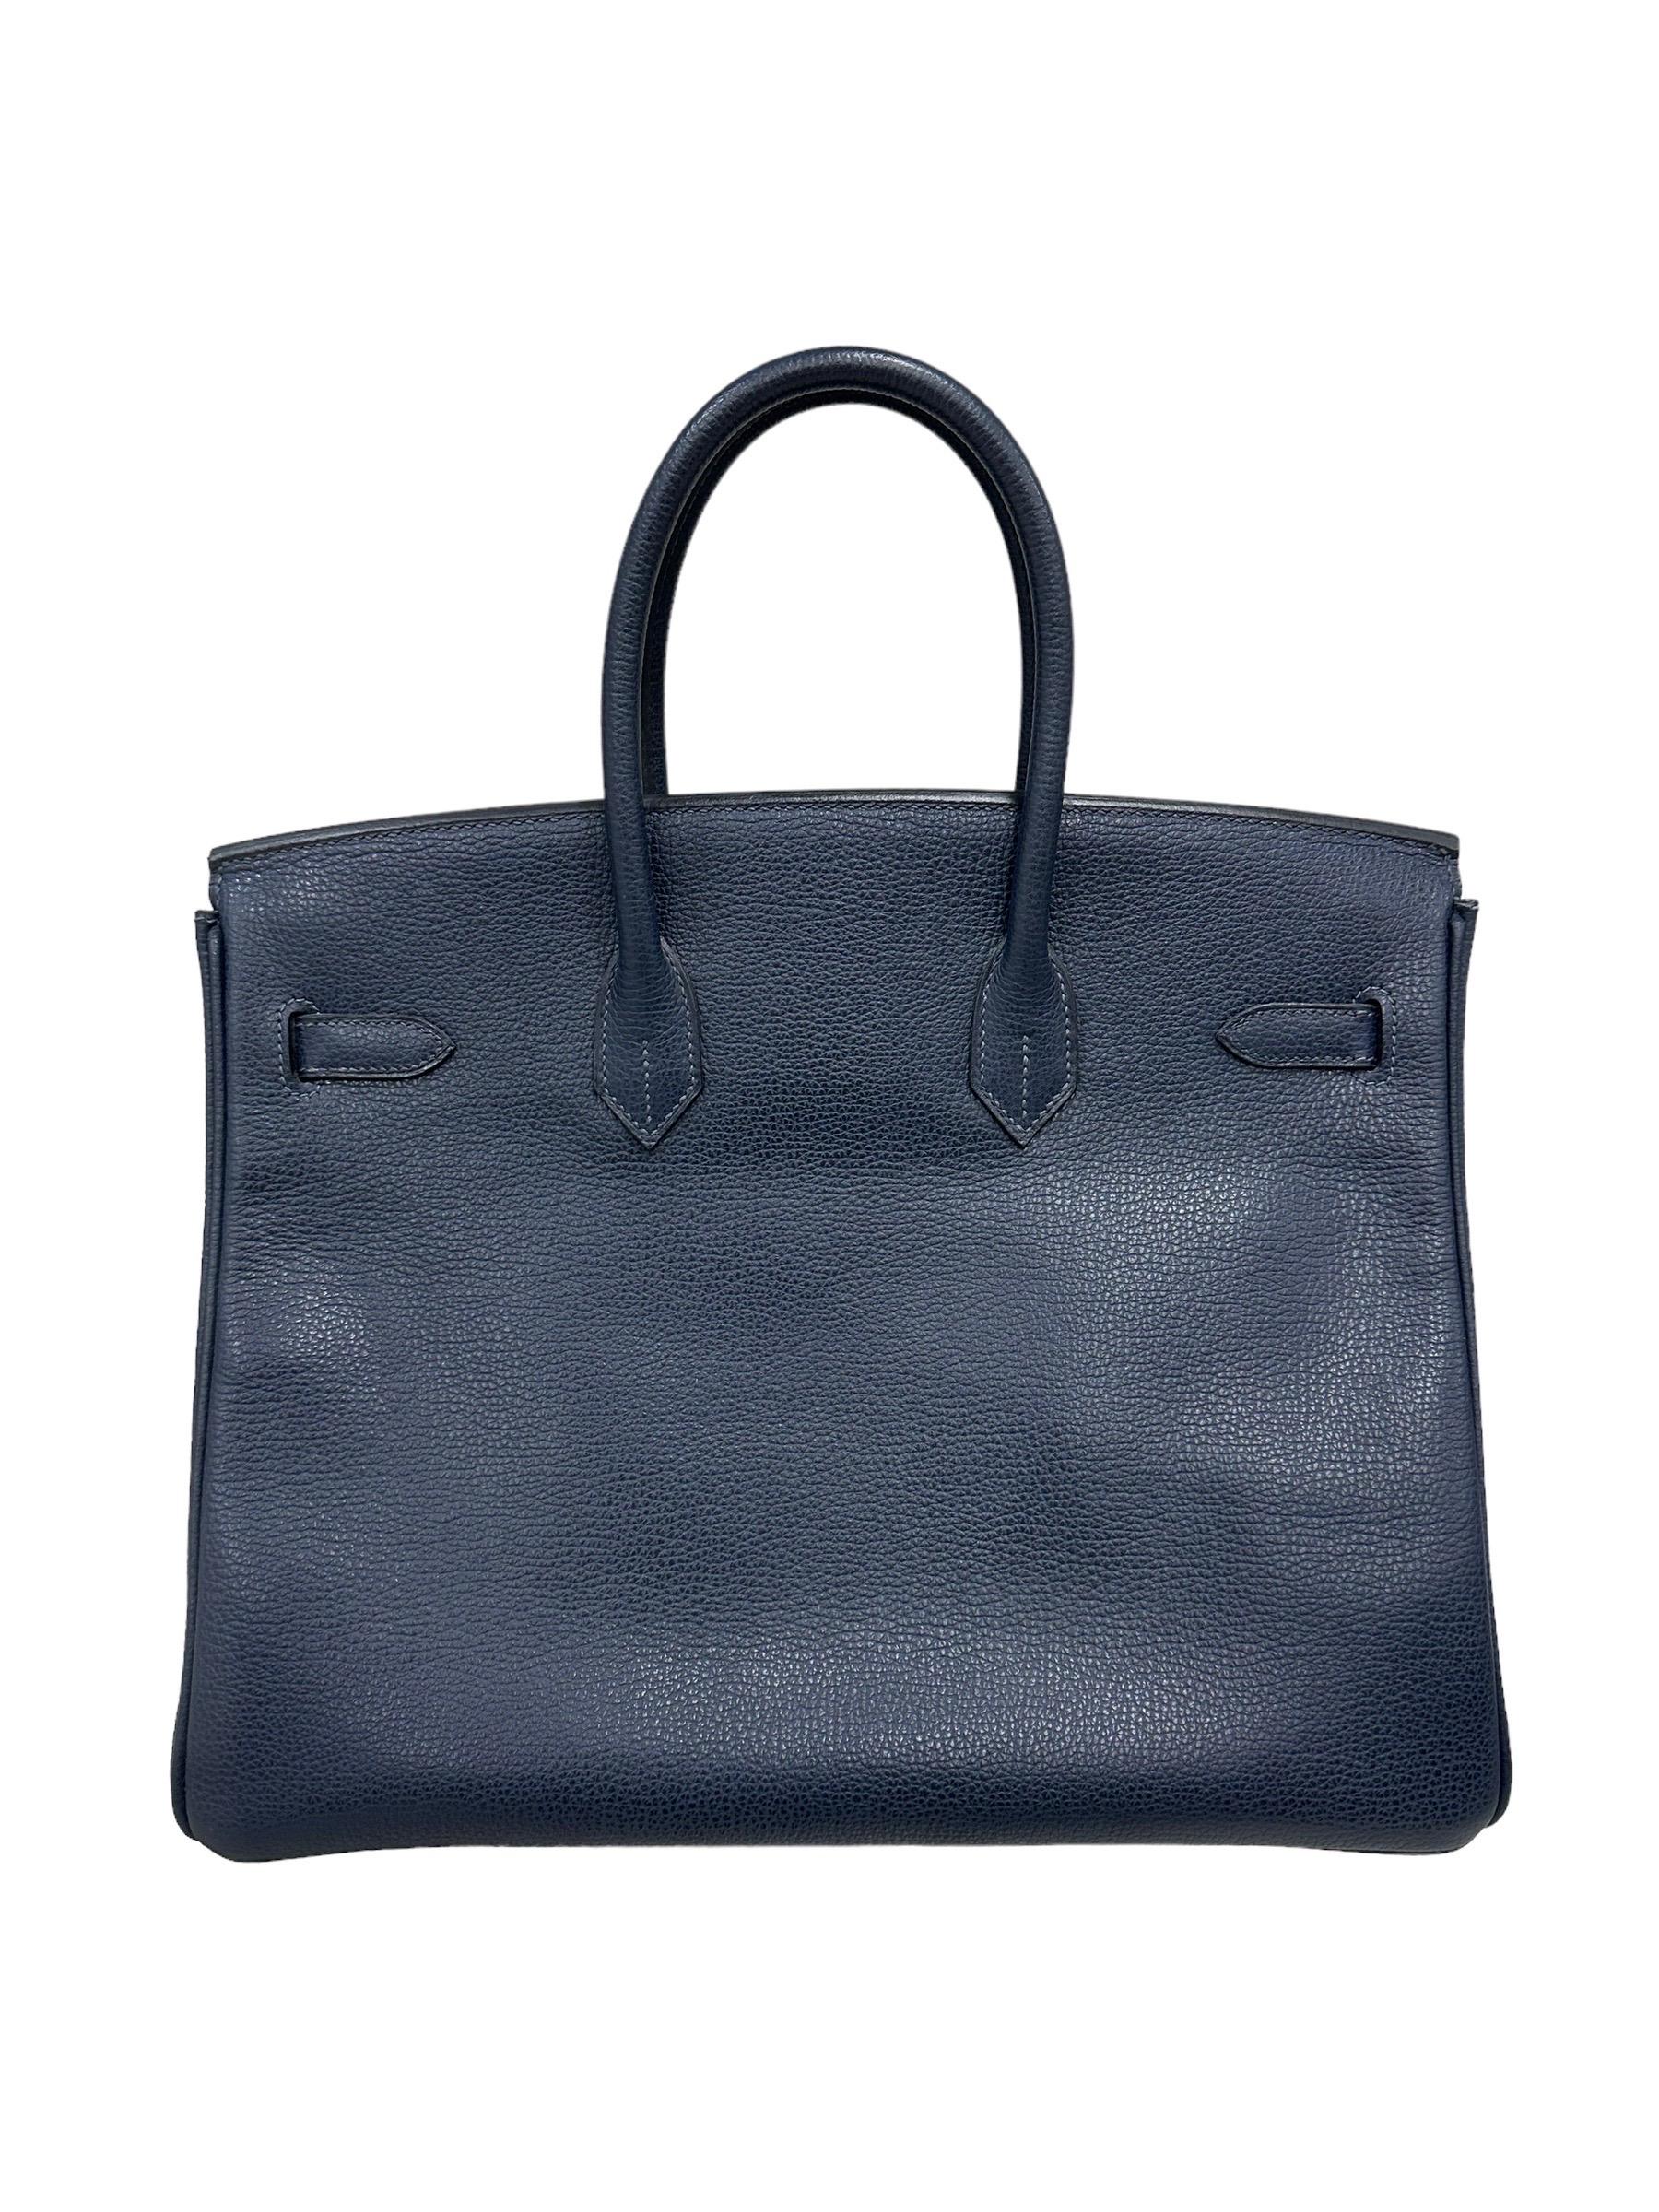 How to Purchase an Hermès Birkin Bag